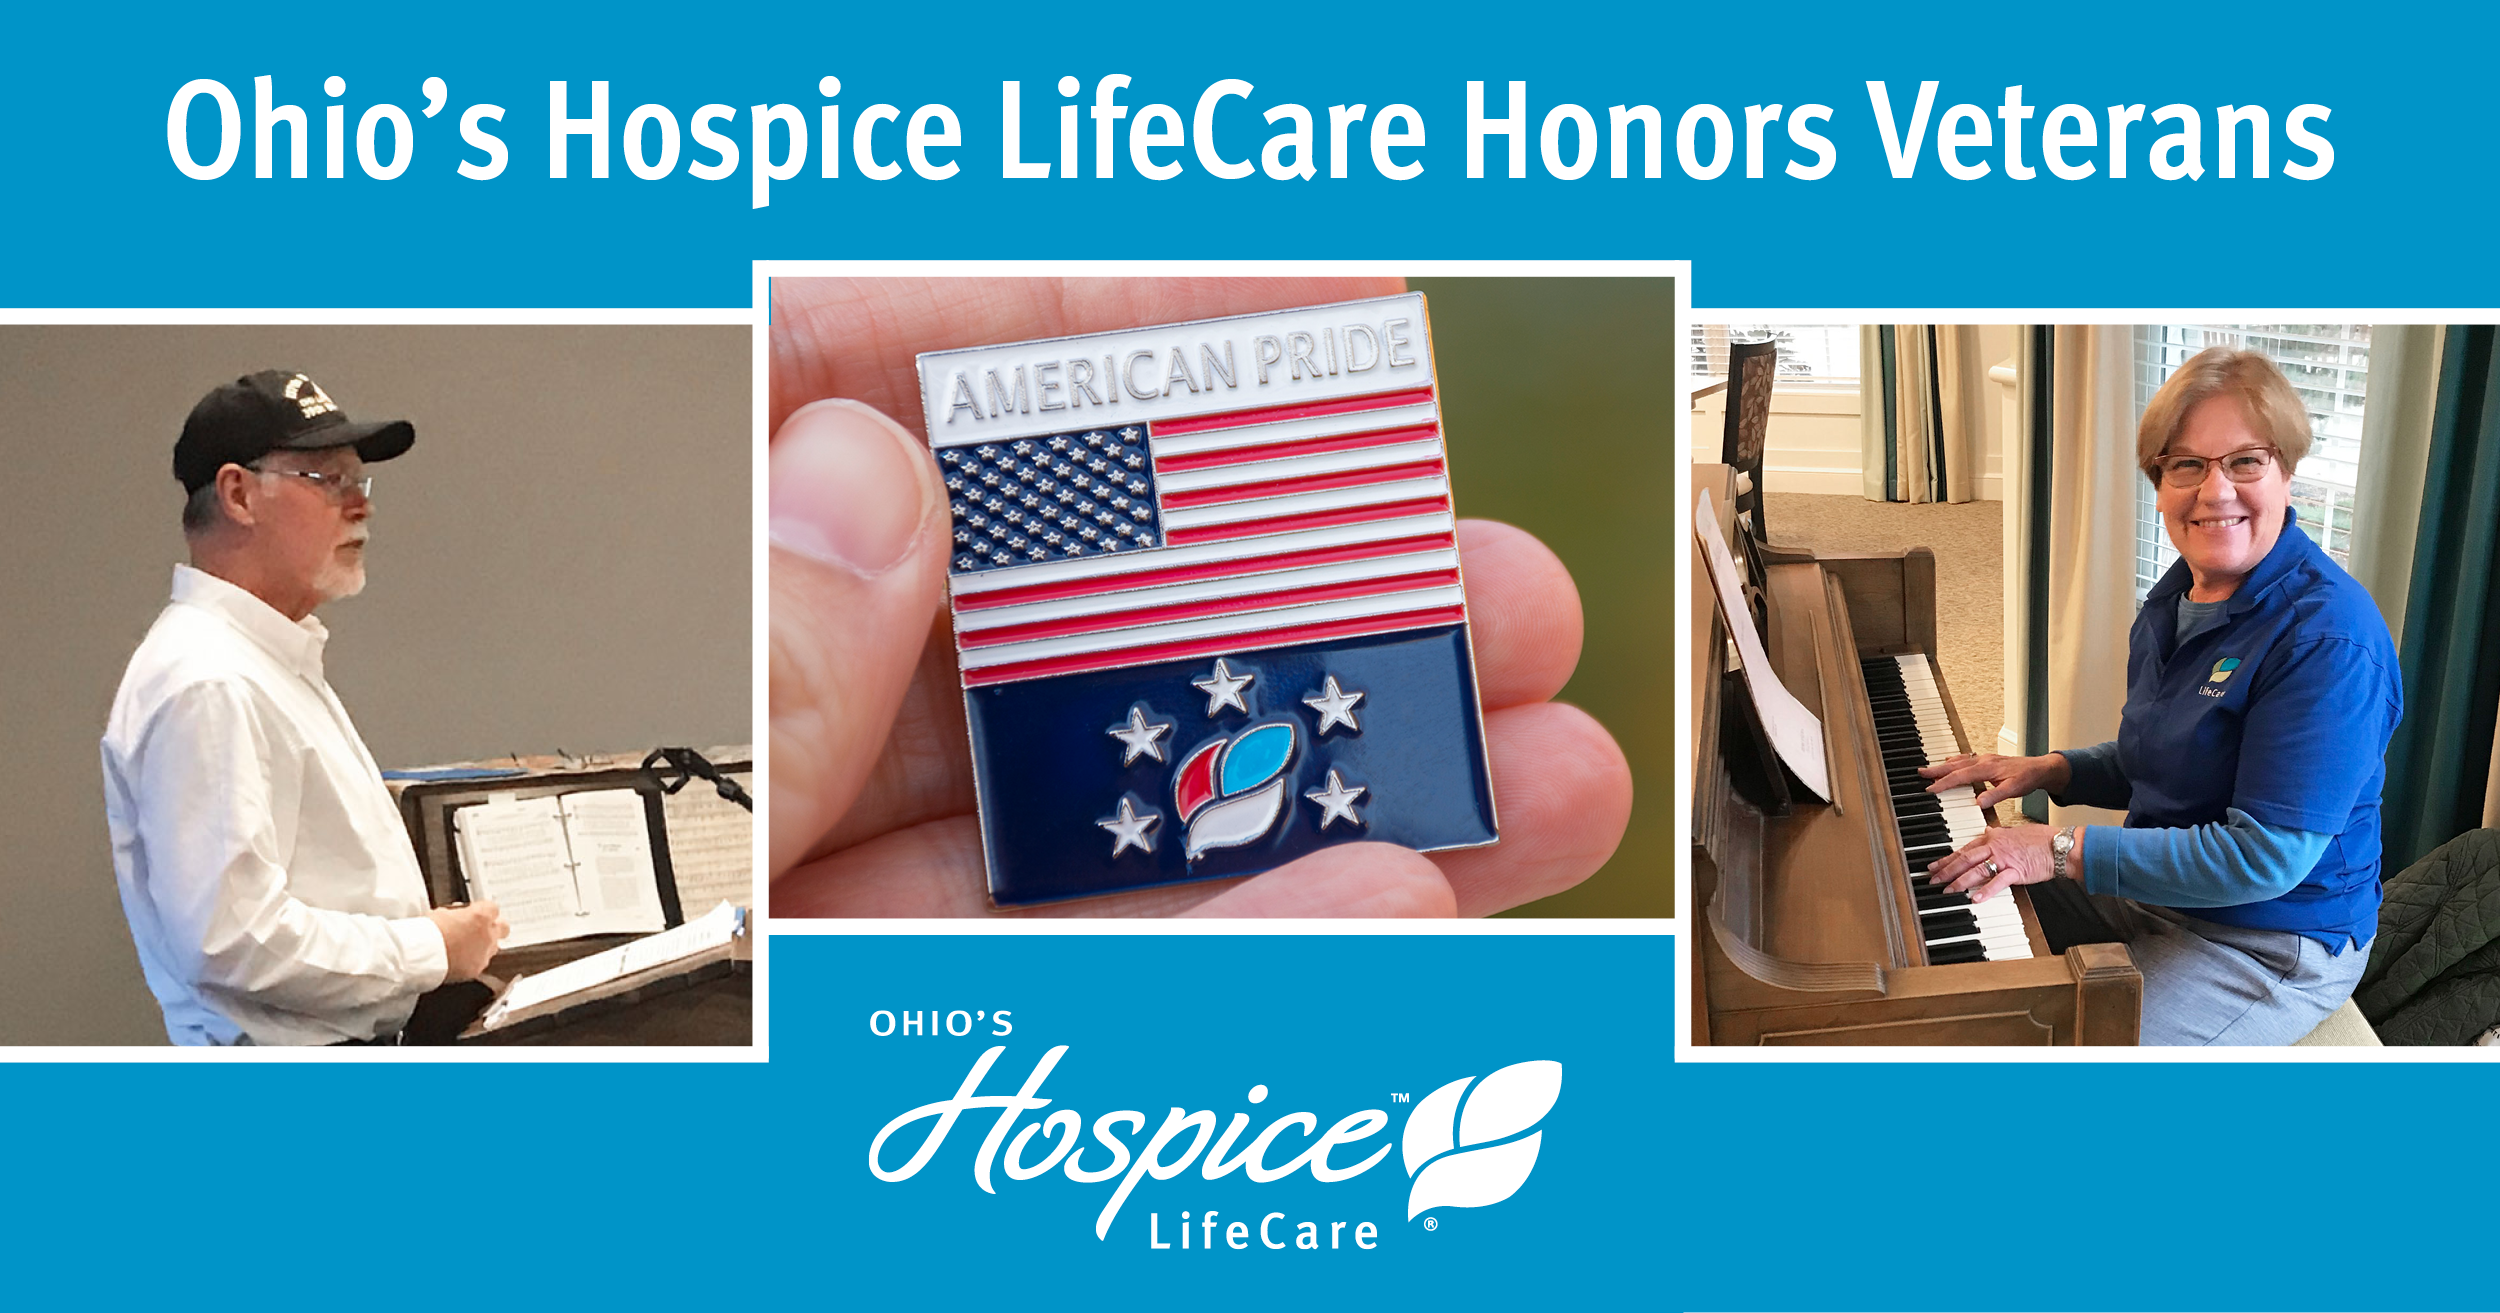 Ohio's Hospice LifeCare Honors Veterans